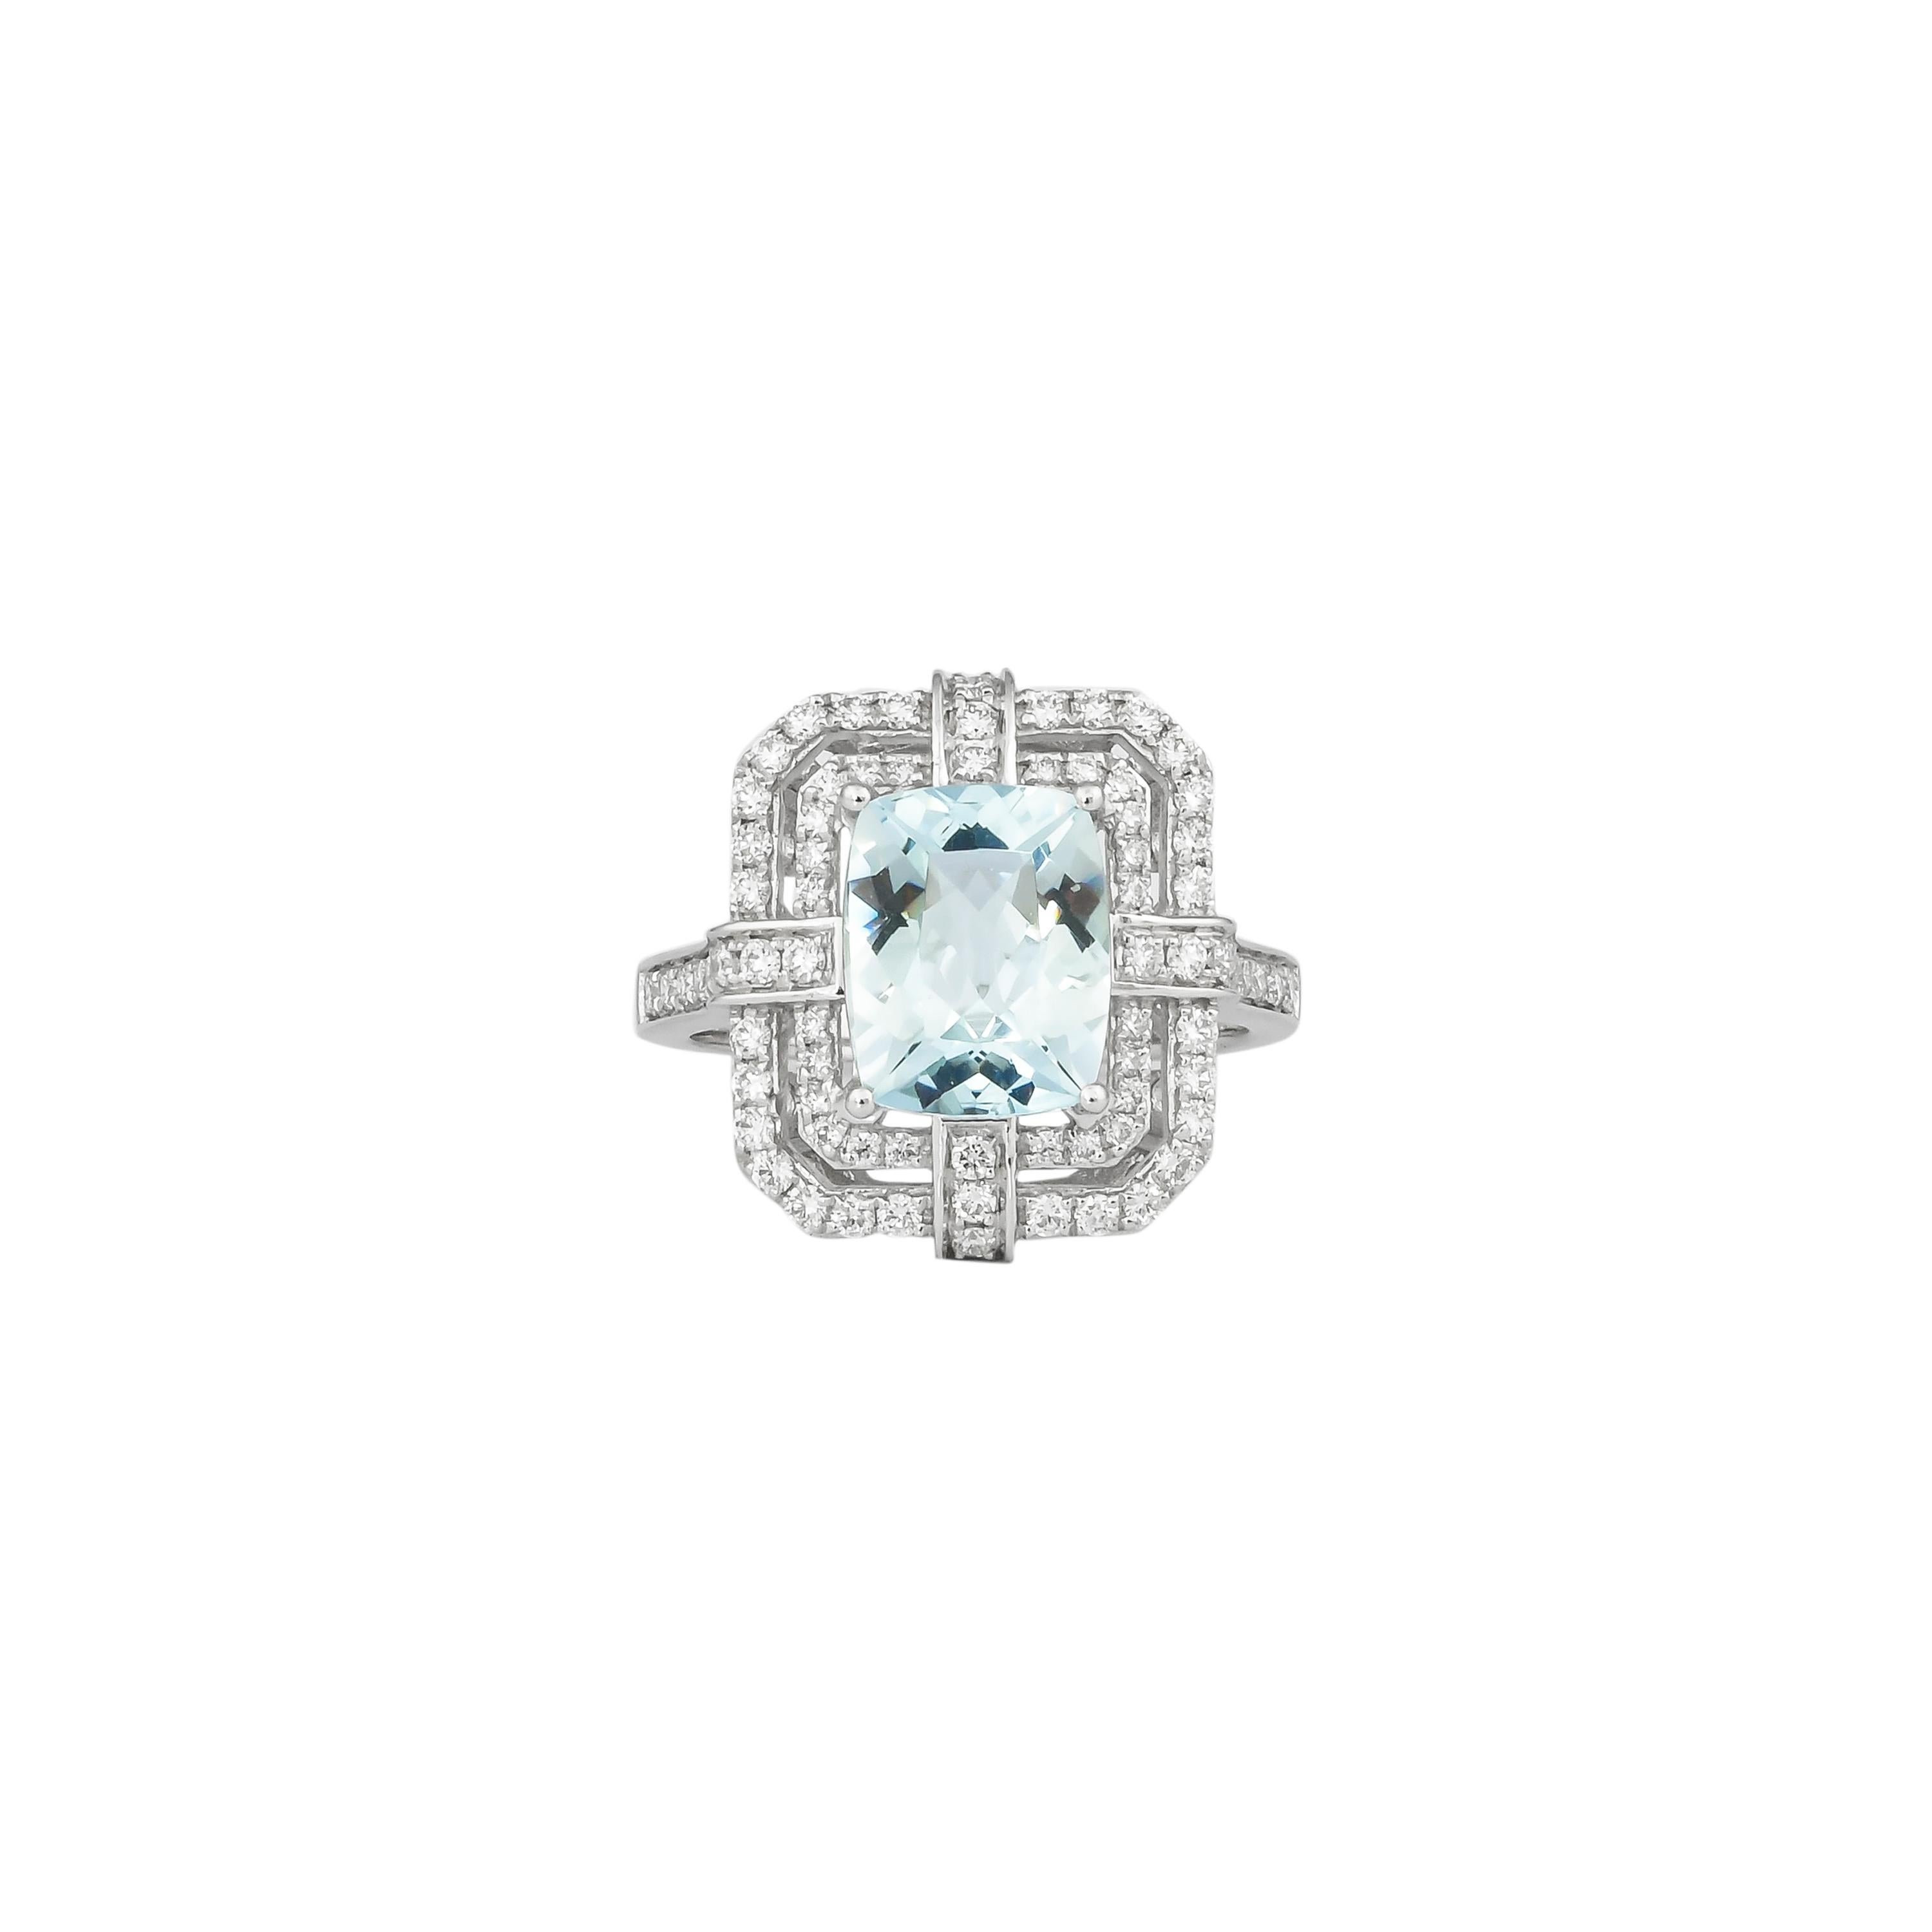 2.6 Carat Aquamarine and Diamond Ring in 18 Karat White Gold 1